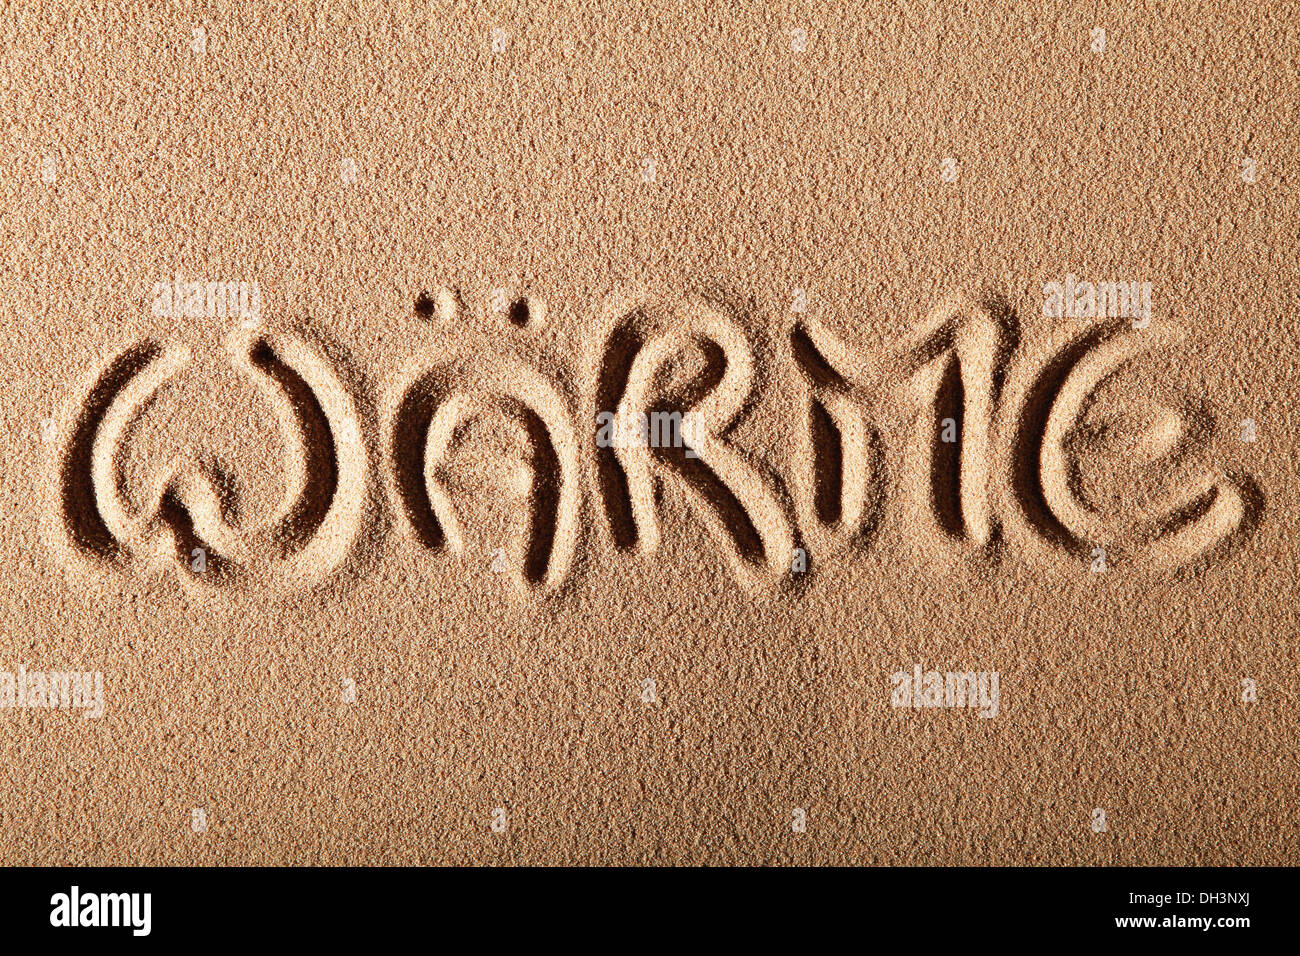 Writing in the sand 'WÄRME' or 'HEAT' Stock Photo